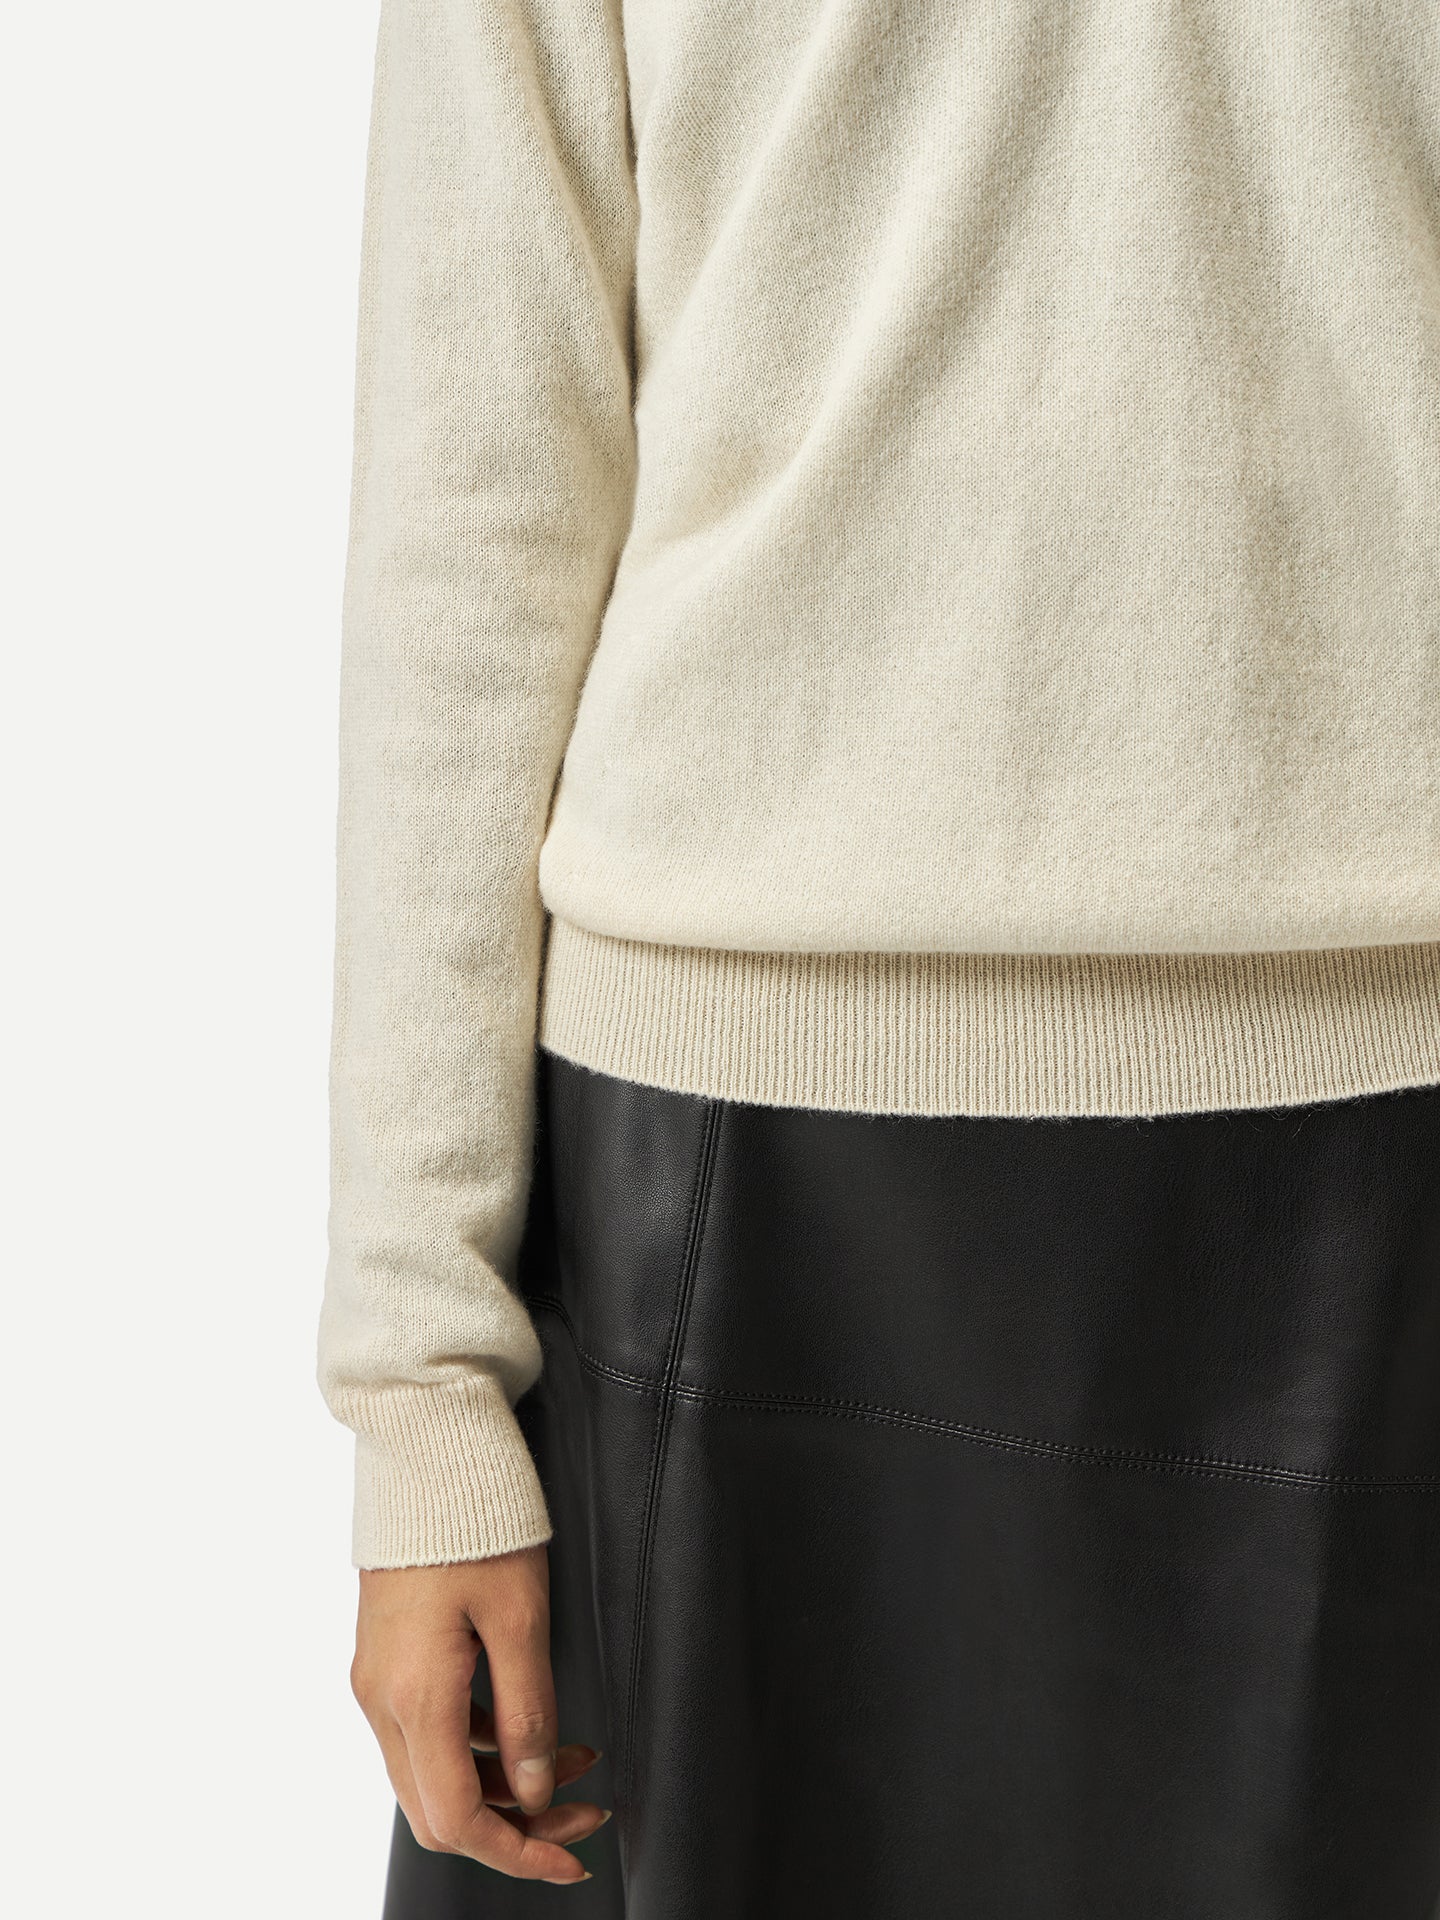 Women's Cashmere Basic V-Neck Sweater Off White - Gobi Cashmere